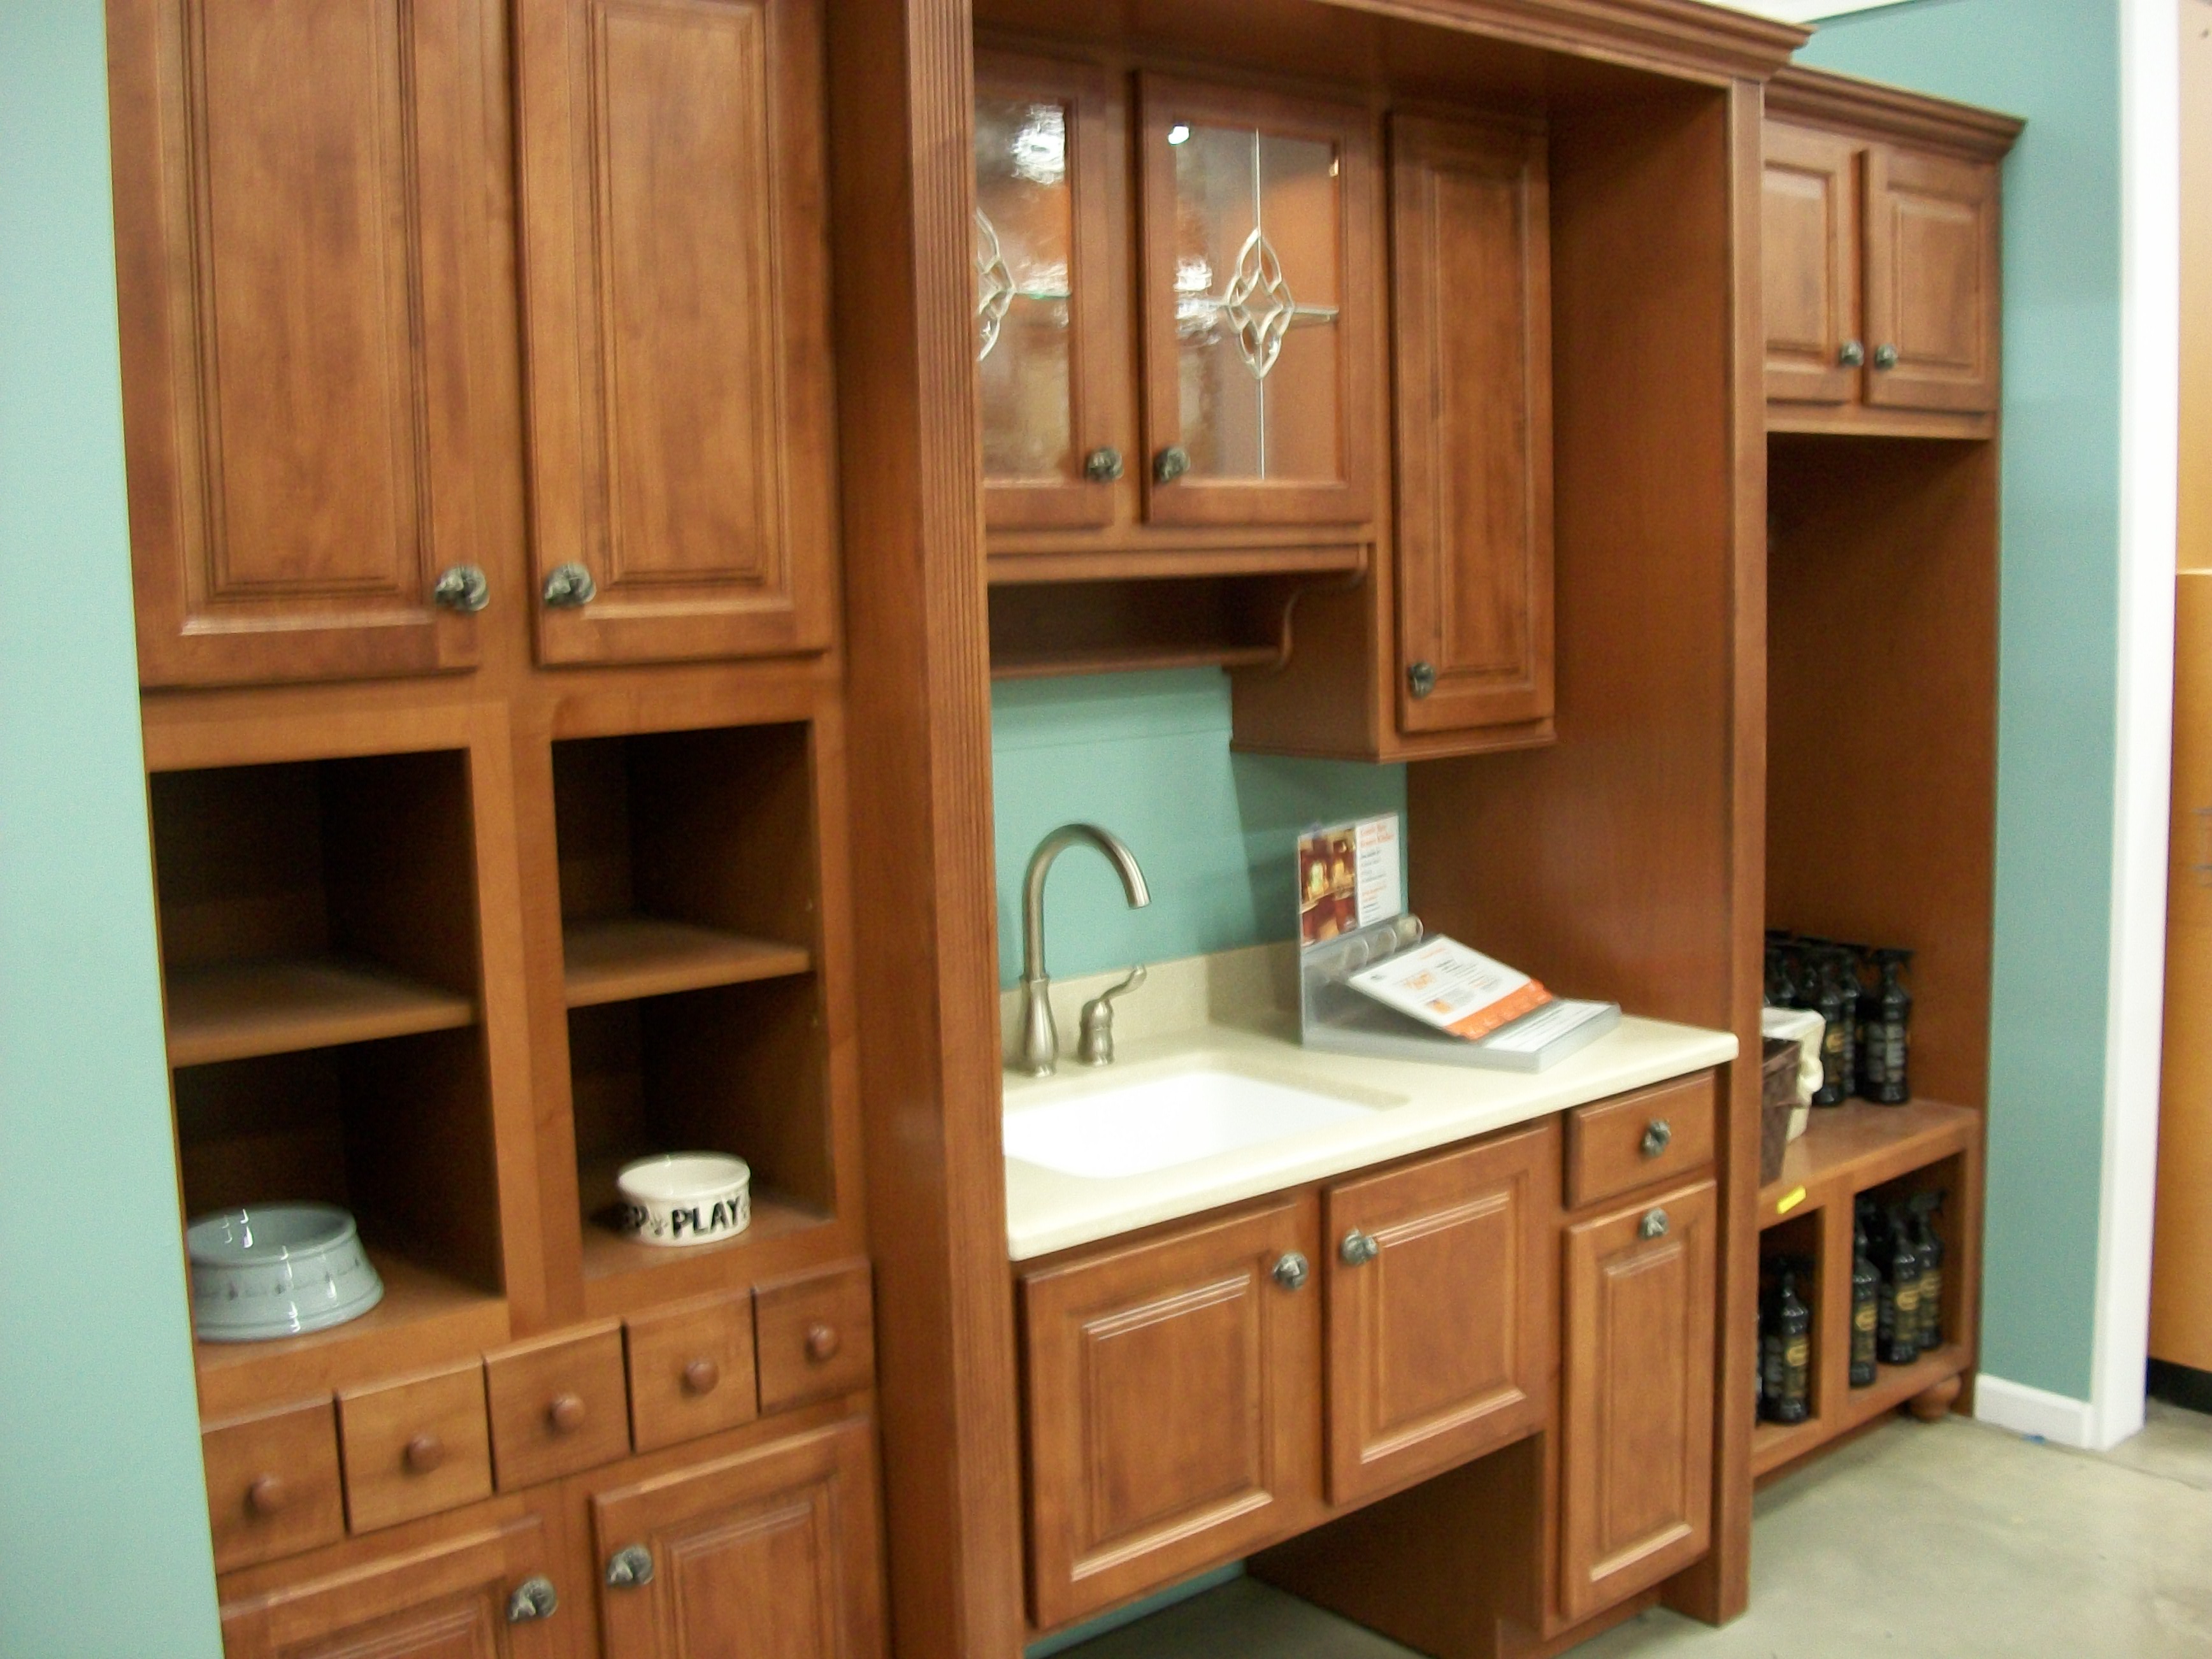 File:Kitchen cabinet display in 2009.jpg